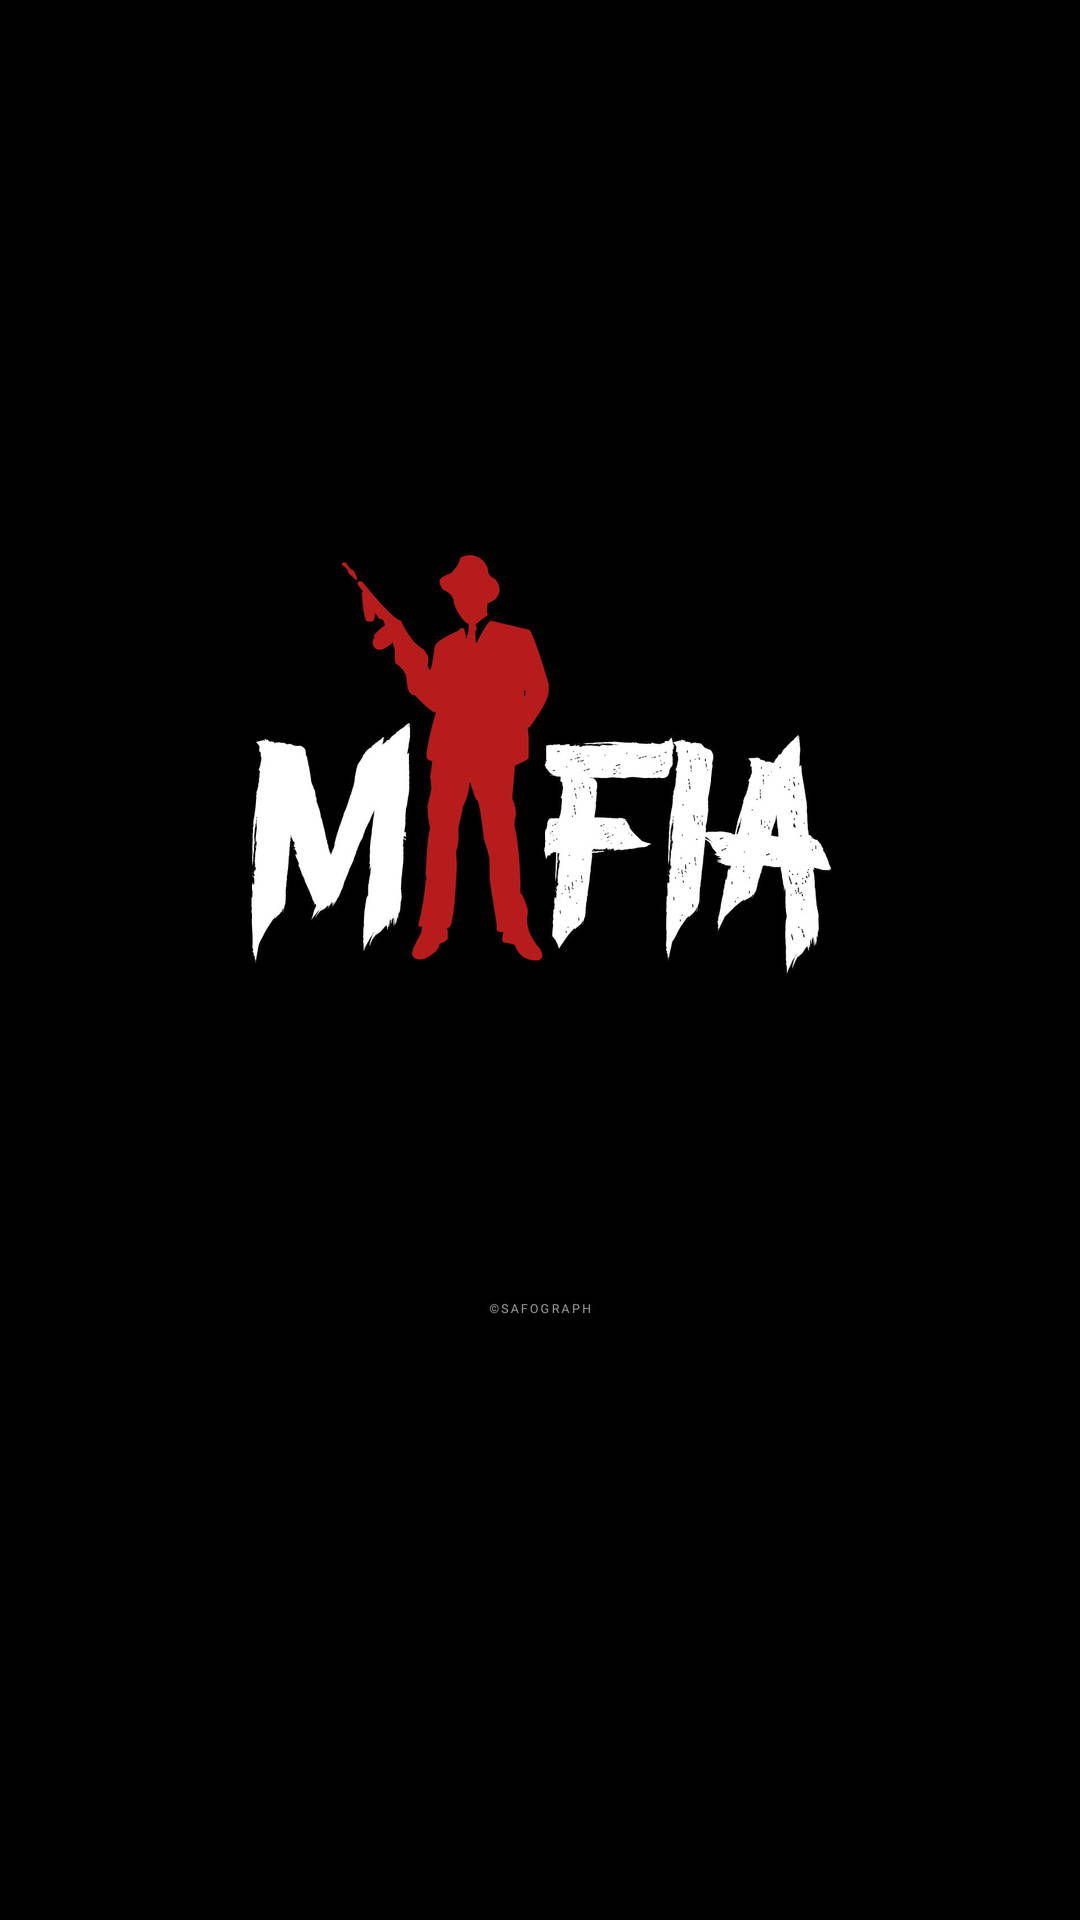 Appealing Mafia-themed Background Wallpaper